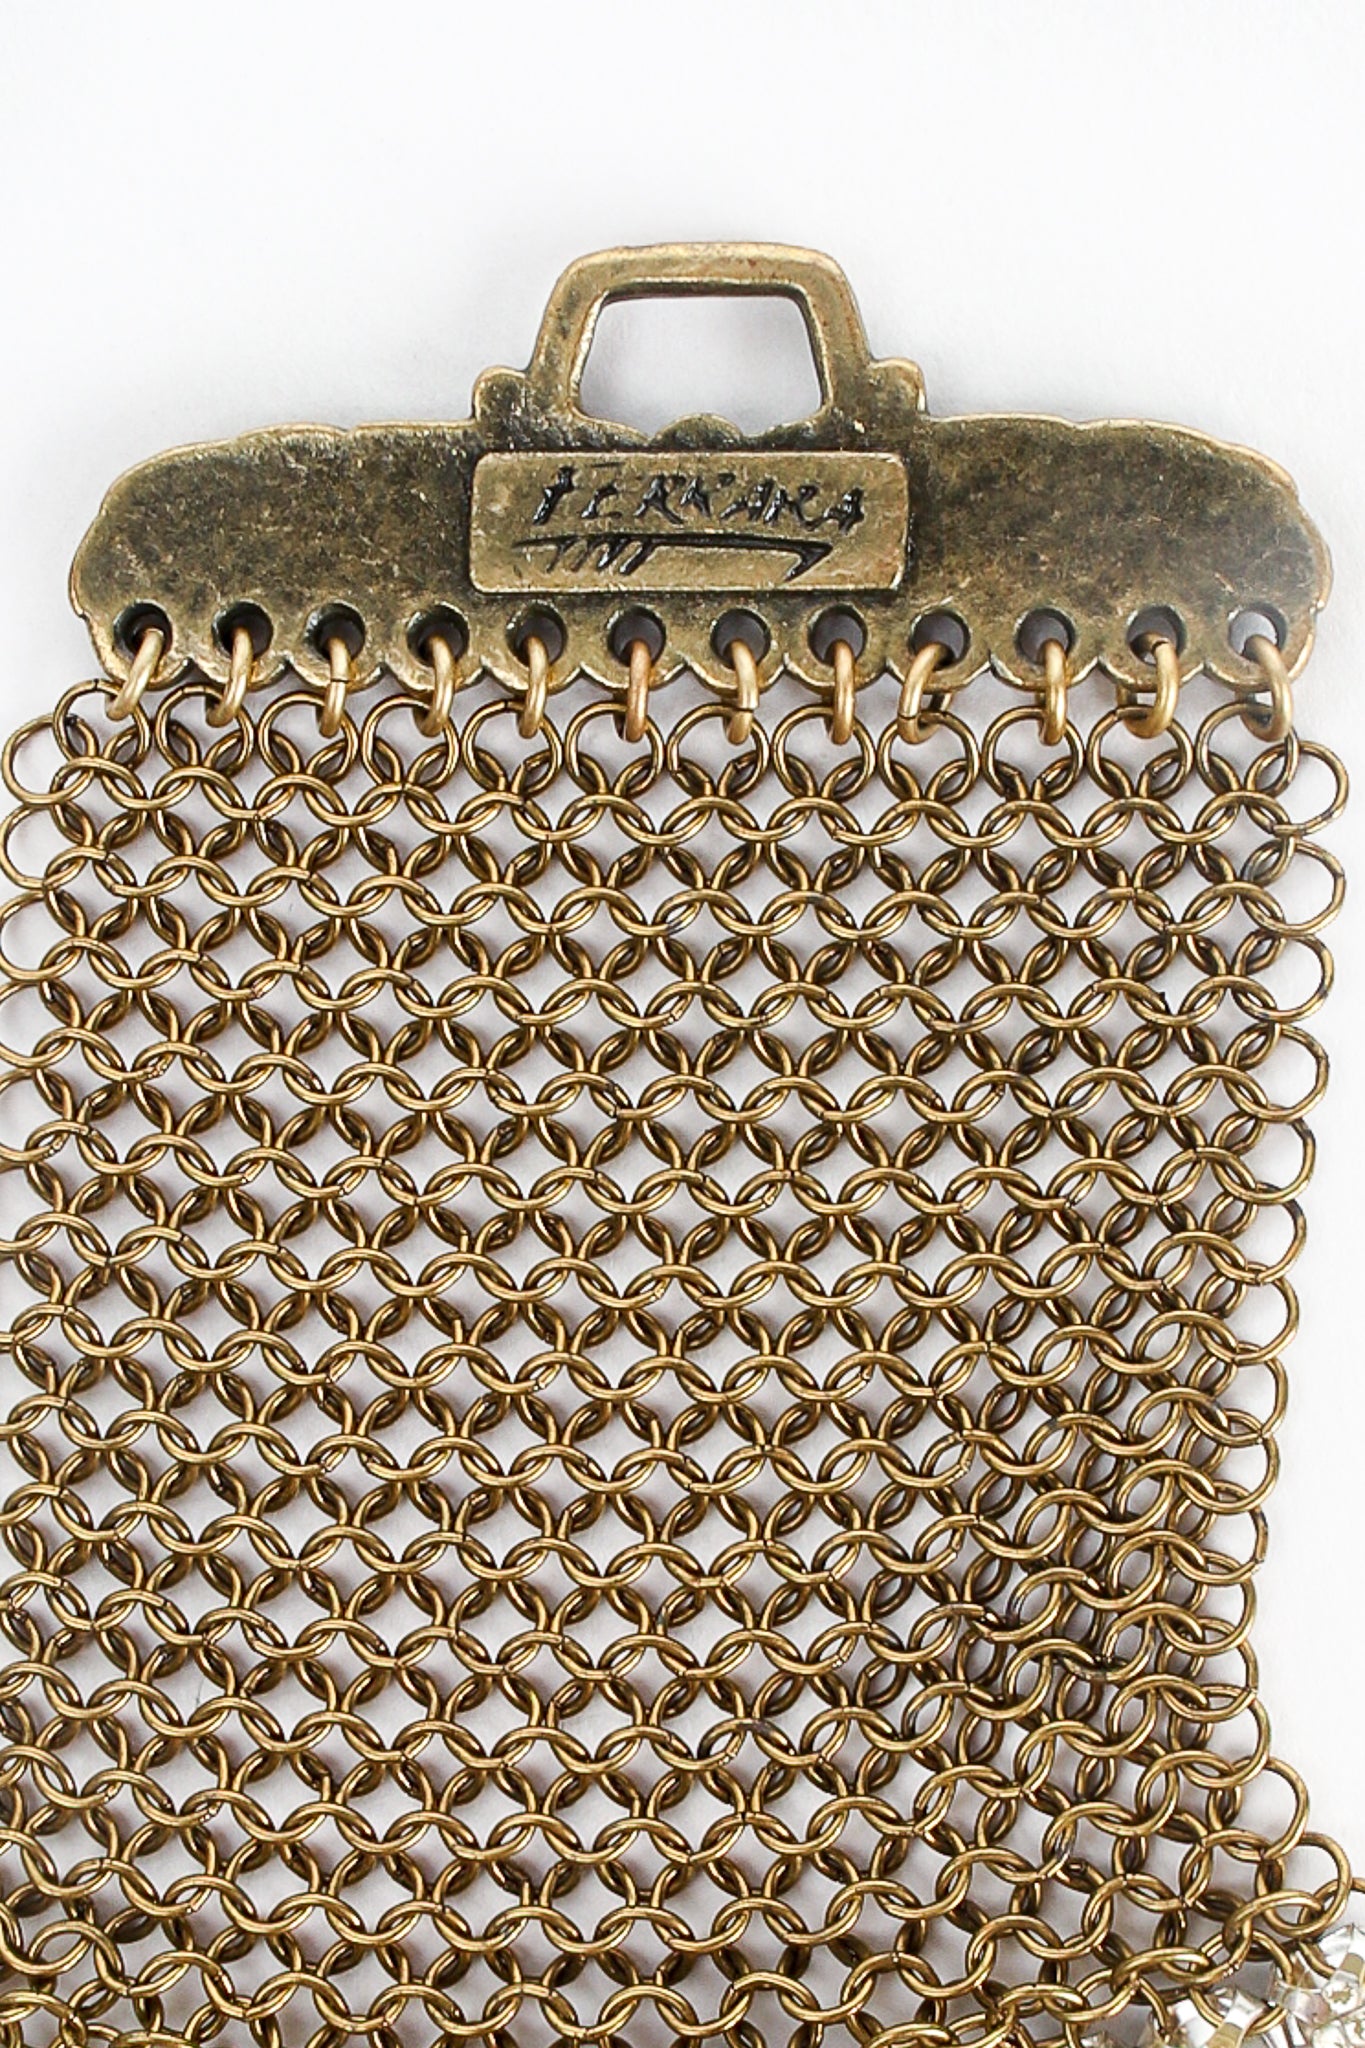 Vintage Anthony Ferrara Ring Mesh Swarovski Bracelet Cartouche Closeup at Recess Los Angeles